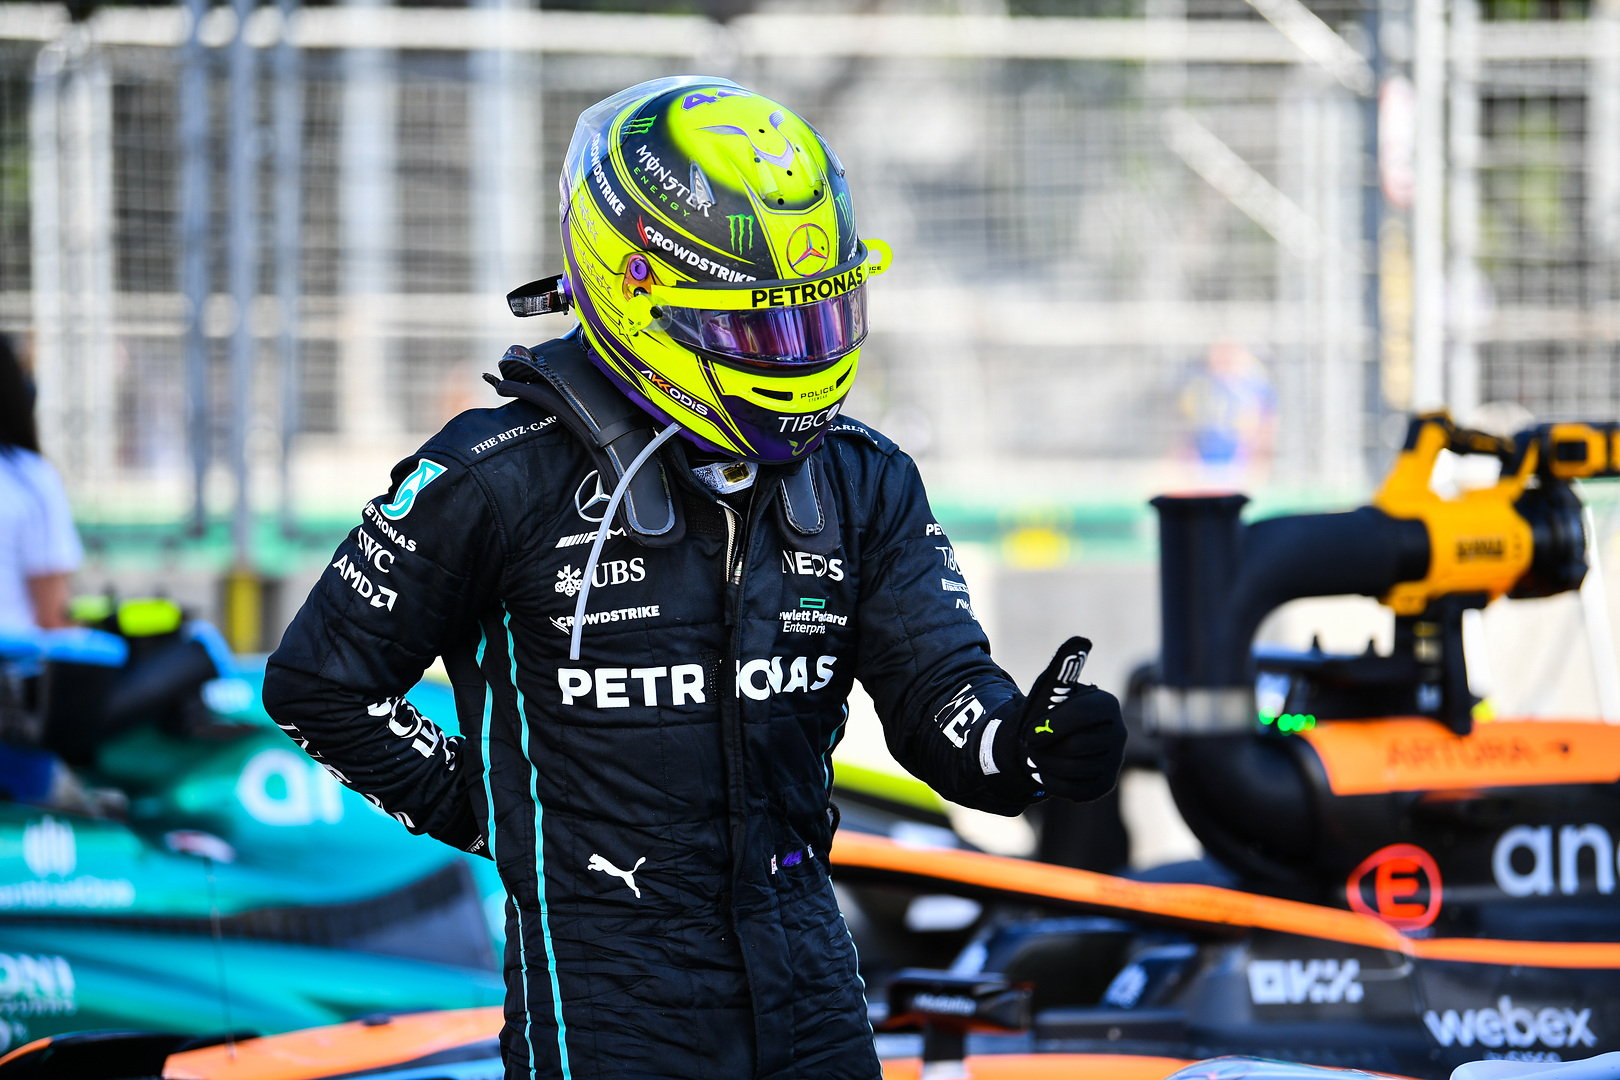 L. Hamiltonas viliasi pagerinti eilinį M. Schumacherio rekordą